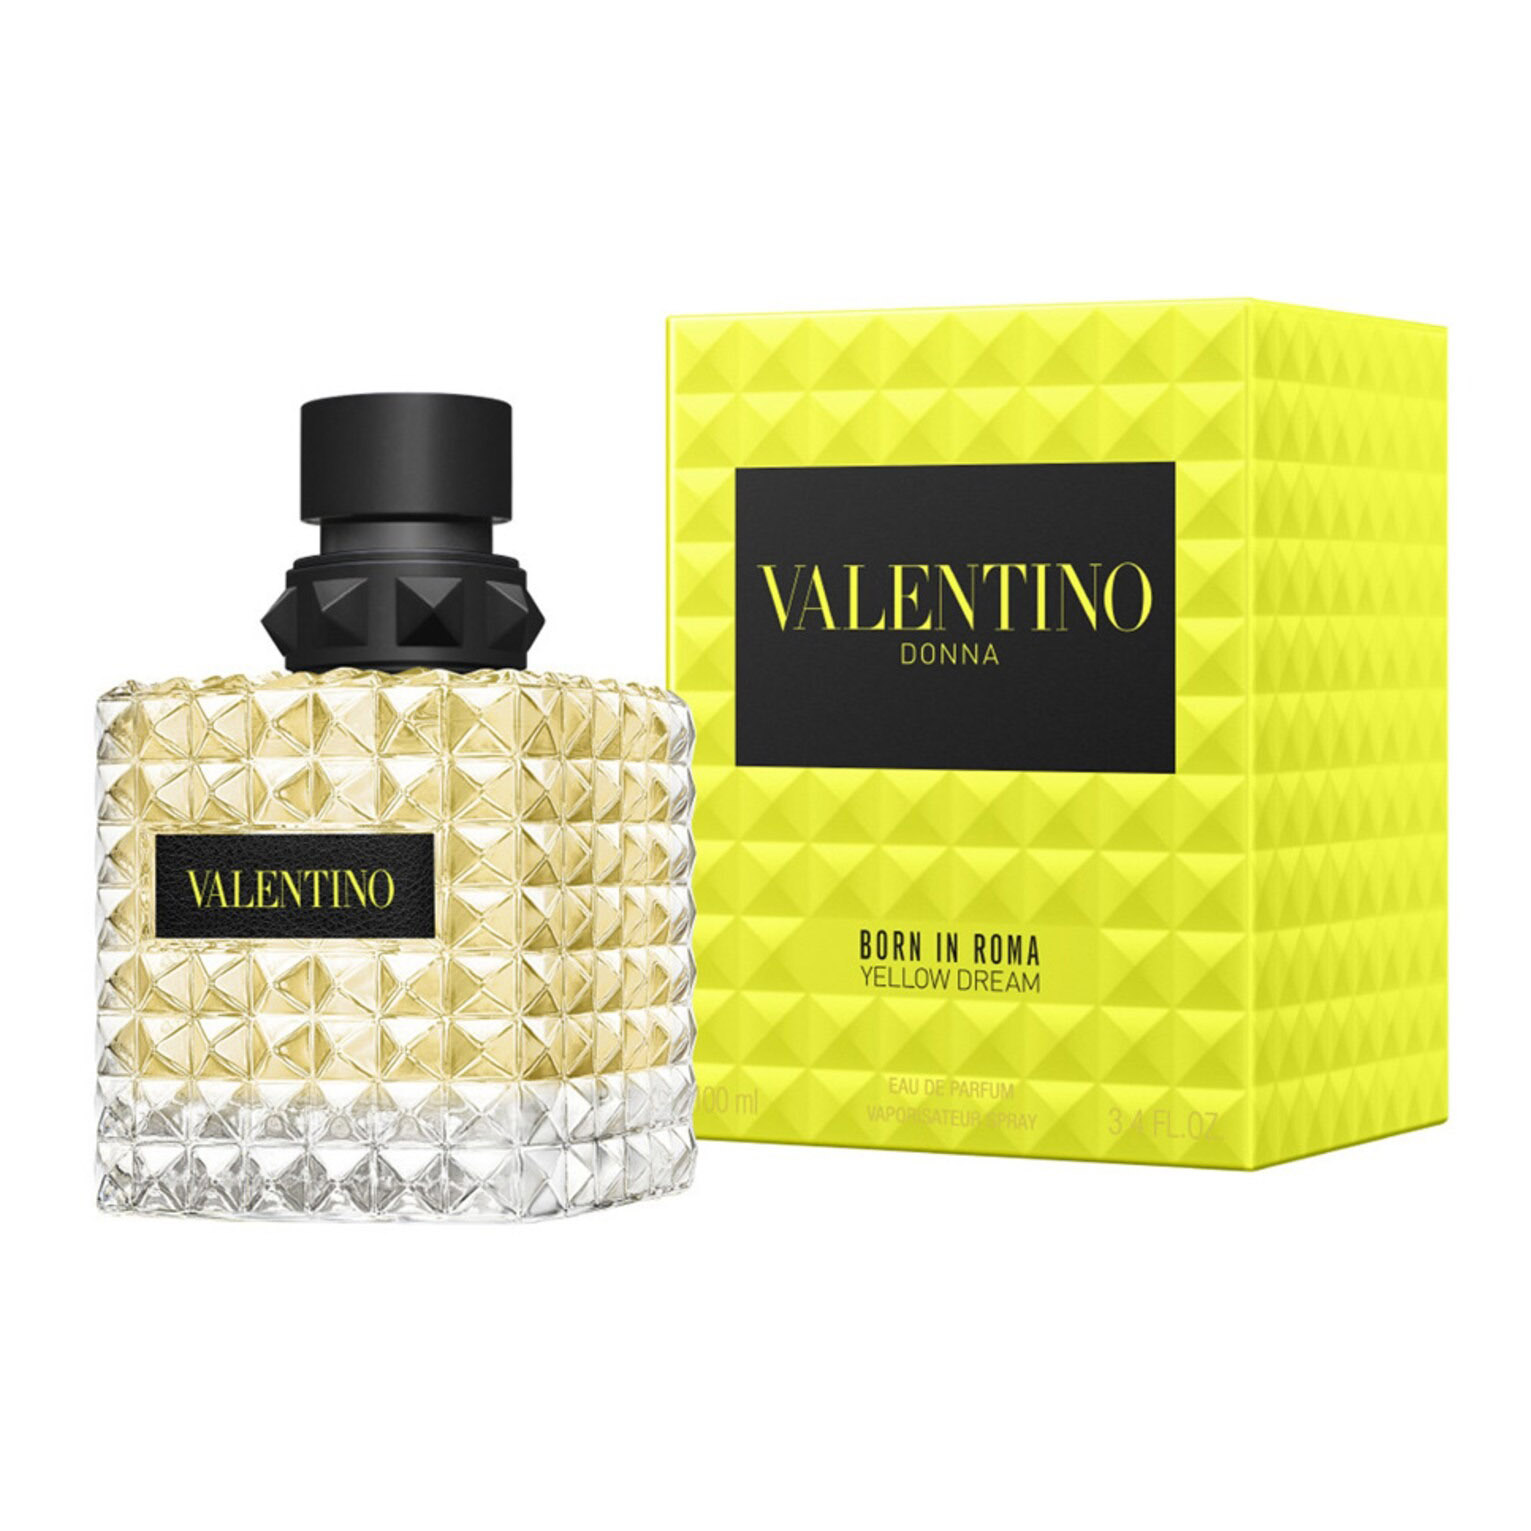 Парфюмерная вода Valentino Donna Born In Roma Yellow Dream, 50 мл парфюмерная вода valentino born in roma donna yellow dream